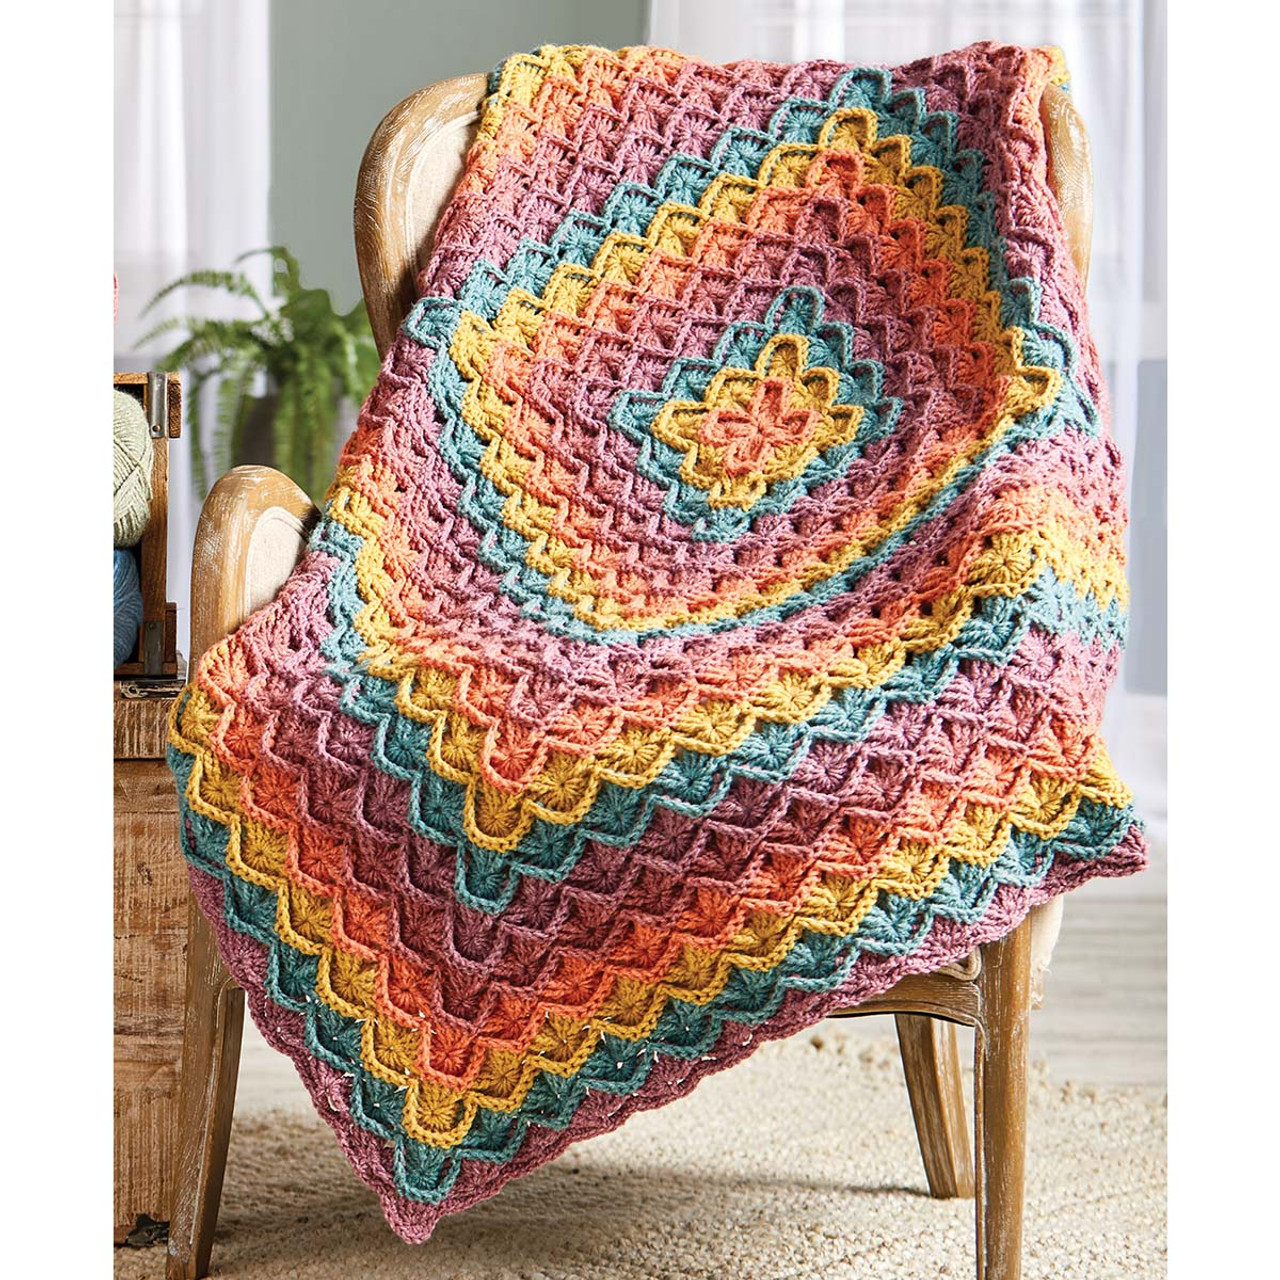  Lion Brand Yarn Mandala Yarn, Multicolor Yarn for Crocheting  and Knitting, Craft Yarn, 1-Pack, Gnome